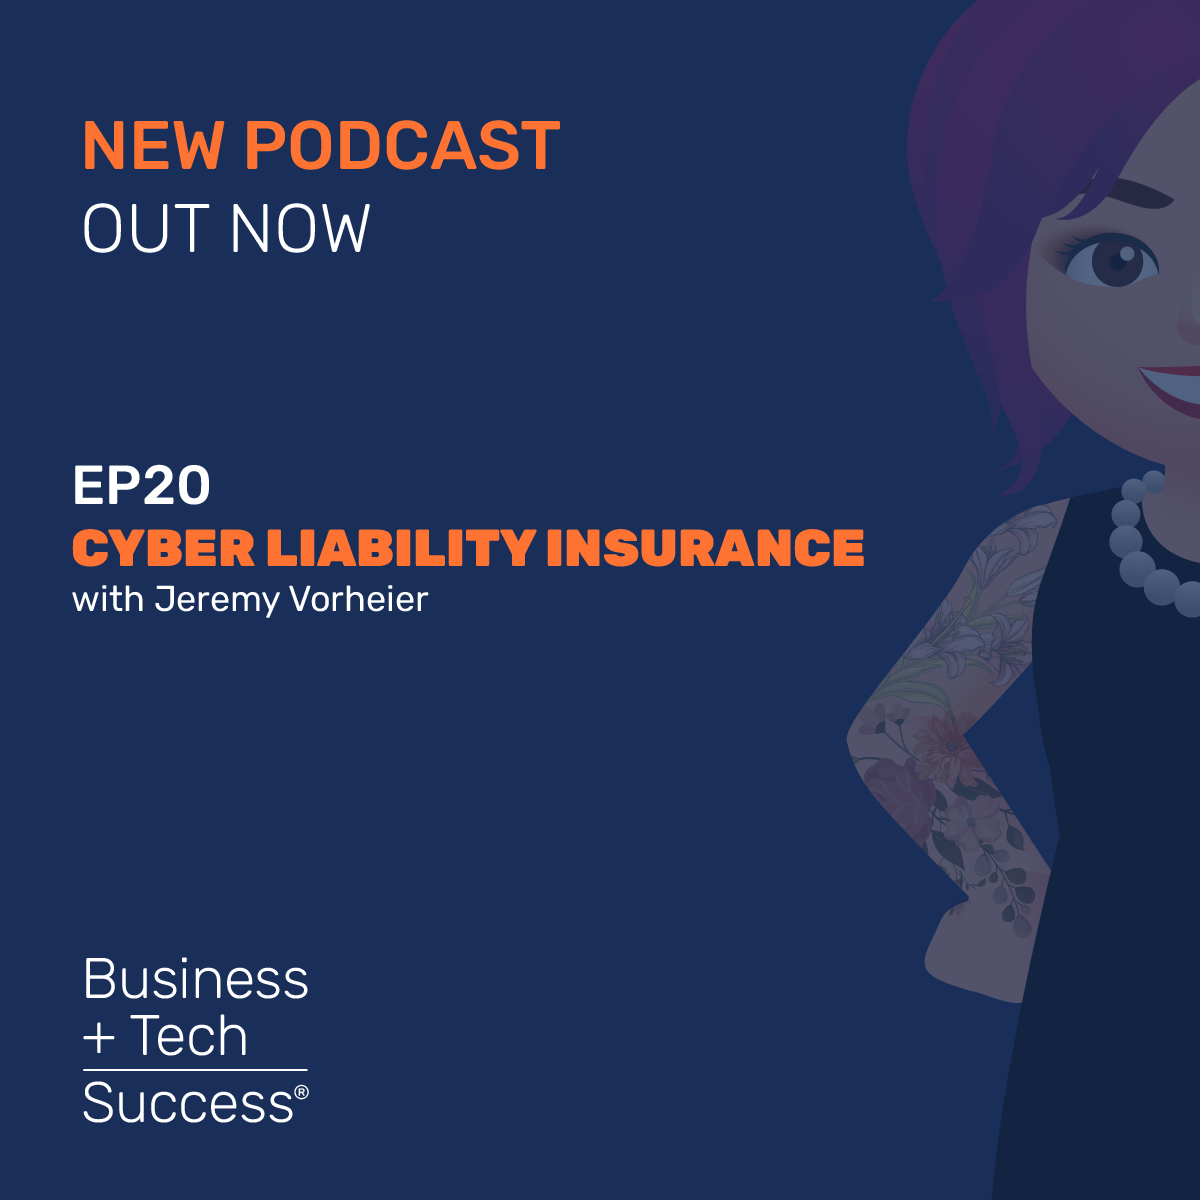 Cyber Liability Insurance with Jeremy Vorheier